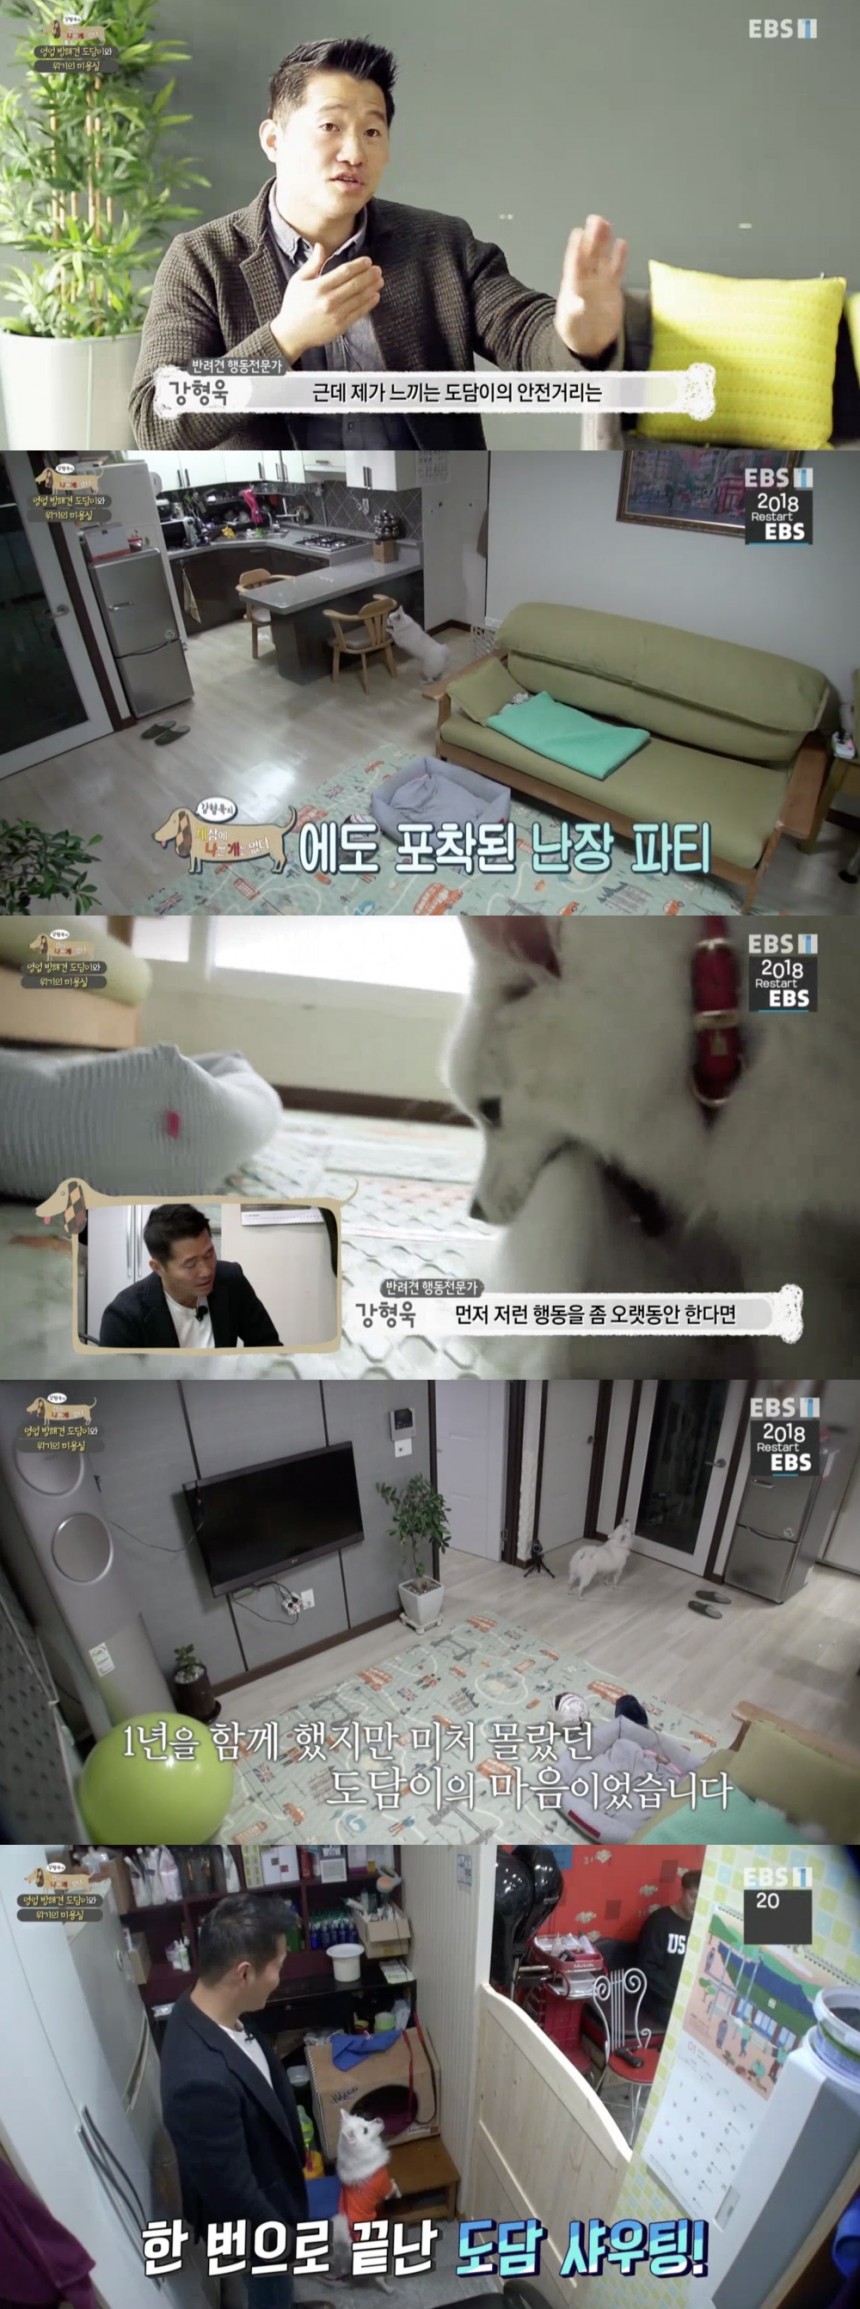 EBS1 ‘강형욱의 세상에 나쁜 개는 없다’ 방송 캡쳐 